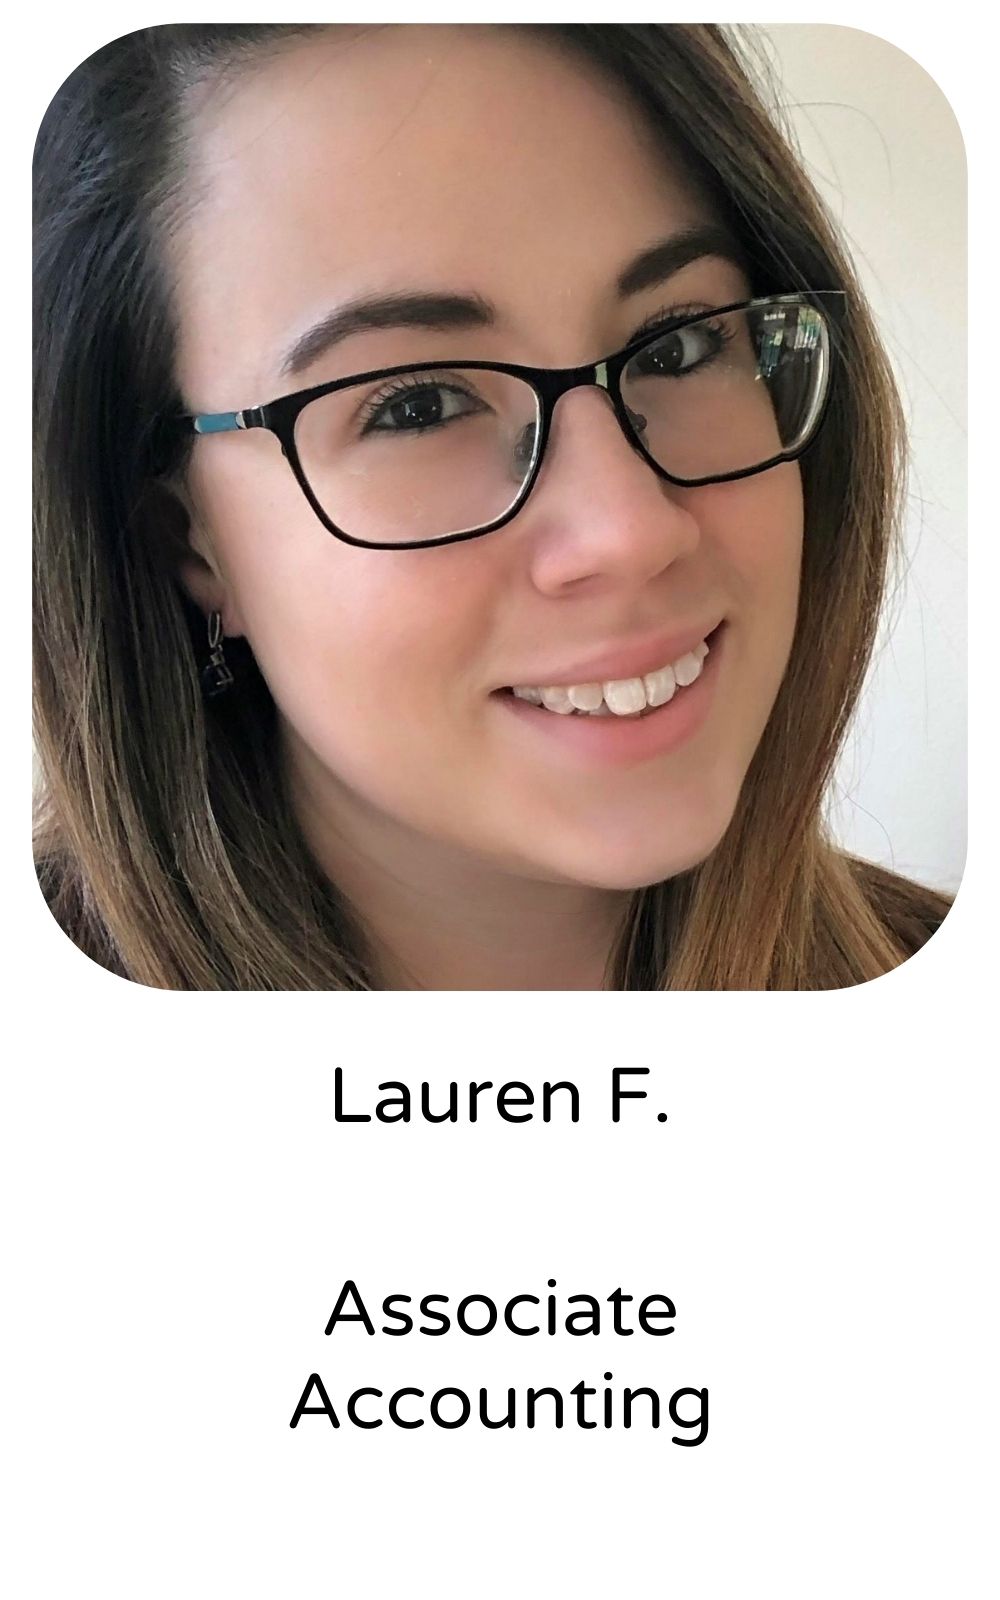 Lauren F, Associate Accounting